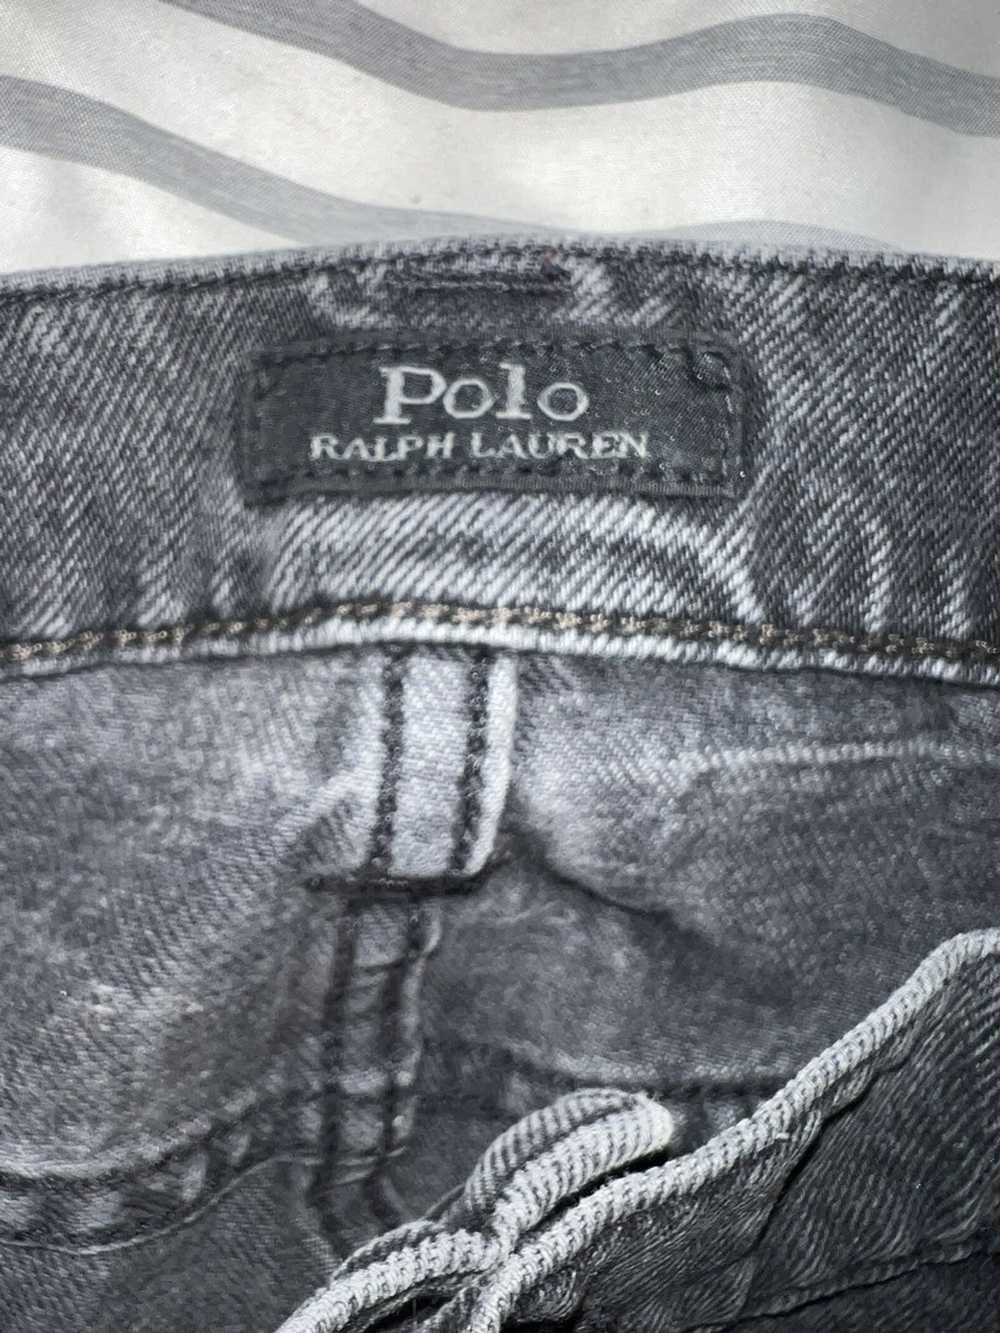 Polo Ralph Lauren Polo Jeans - image 3